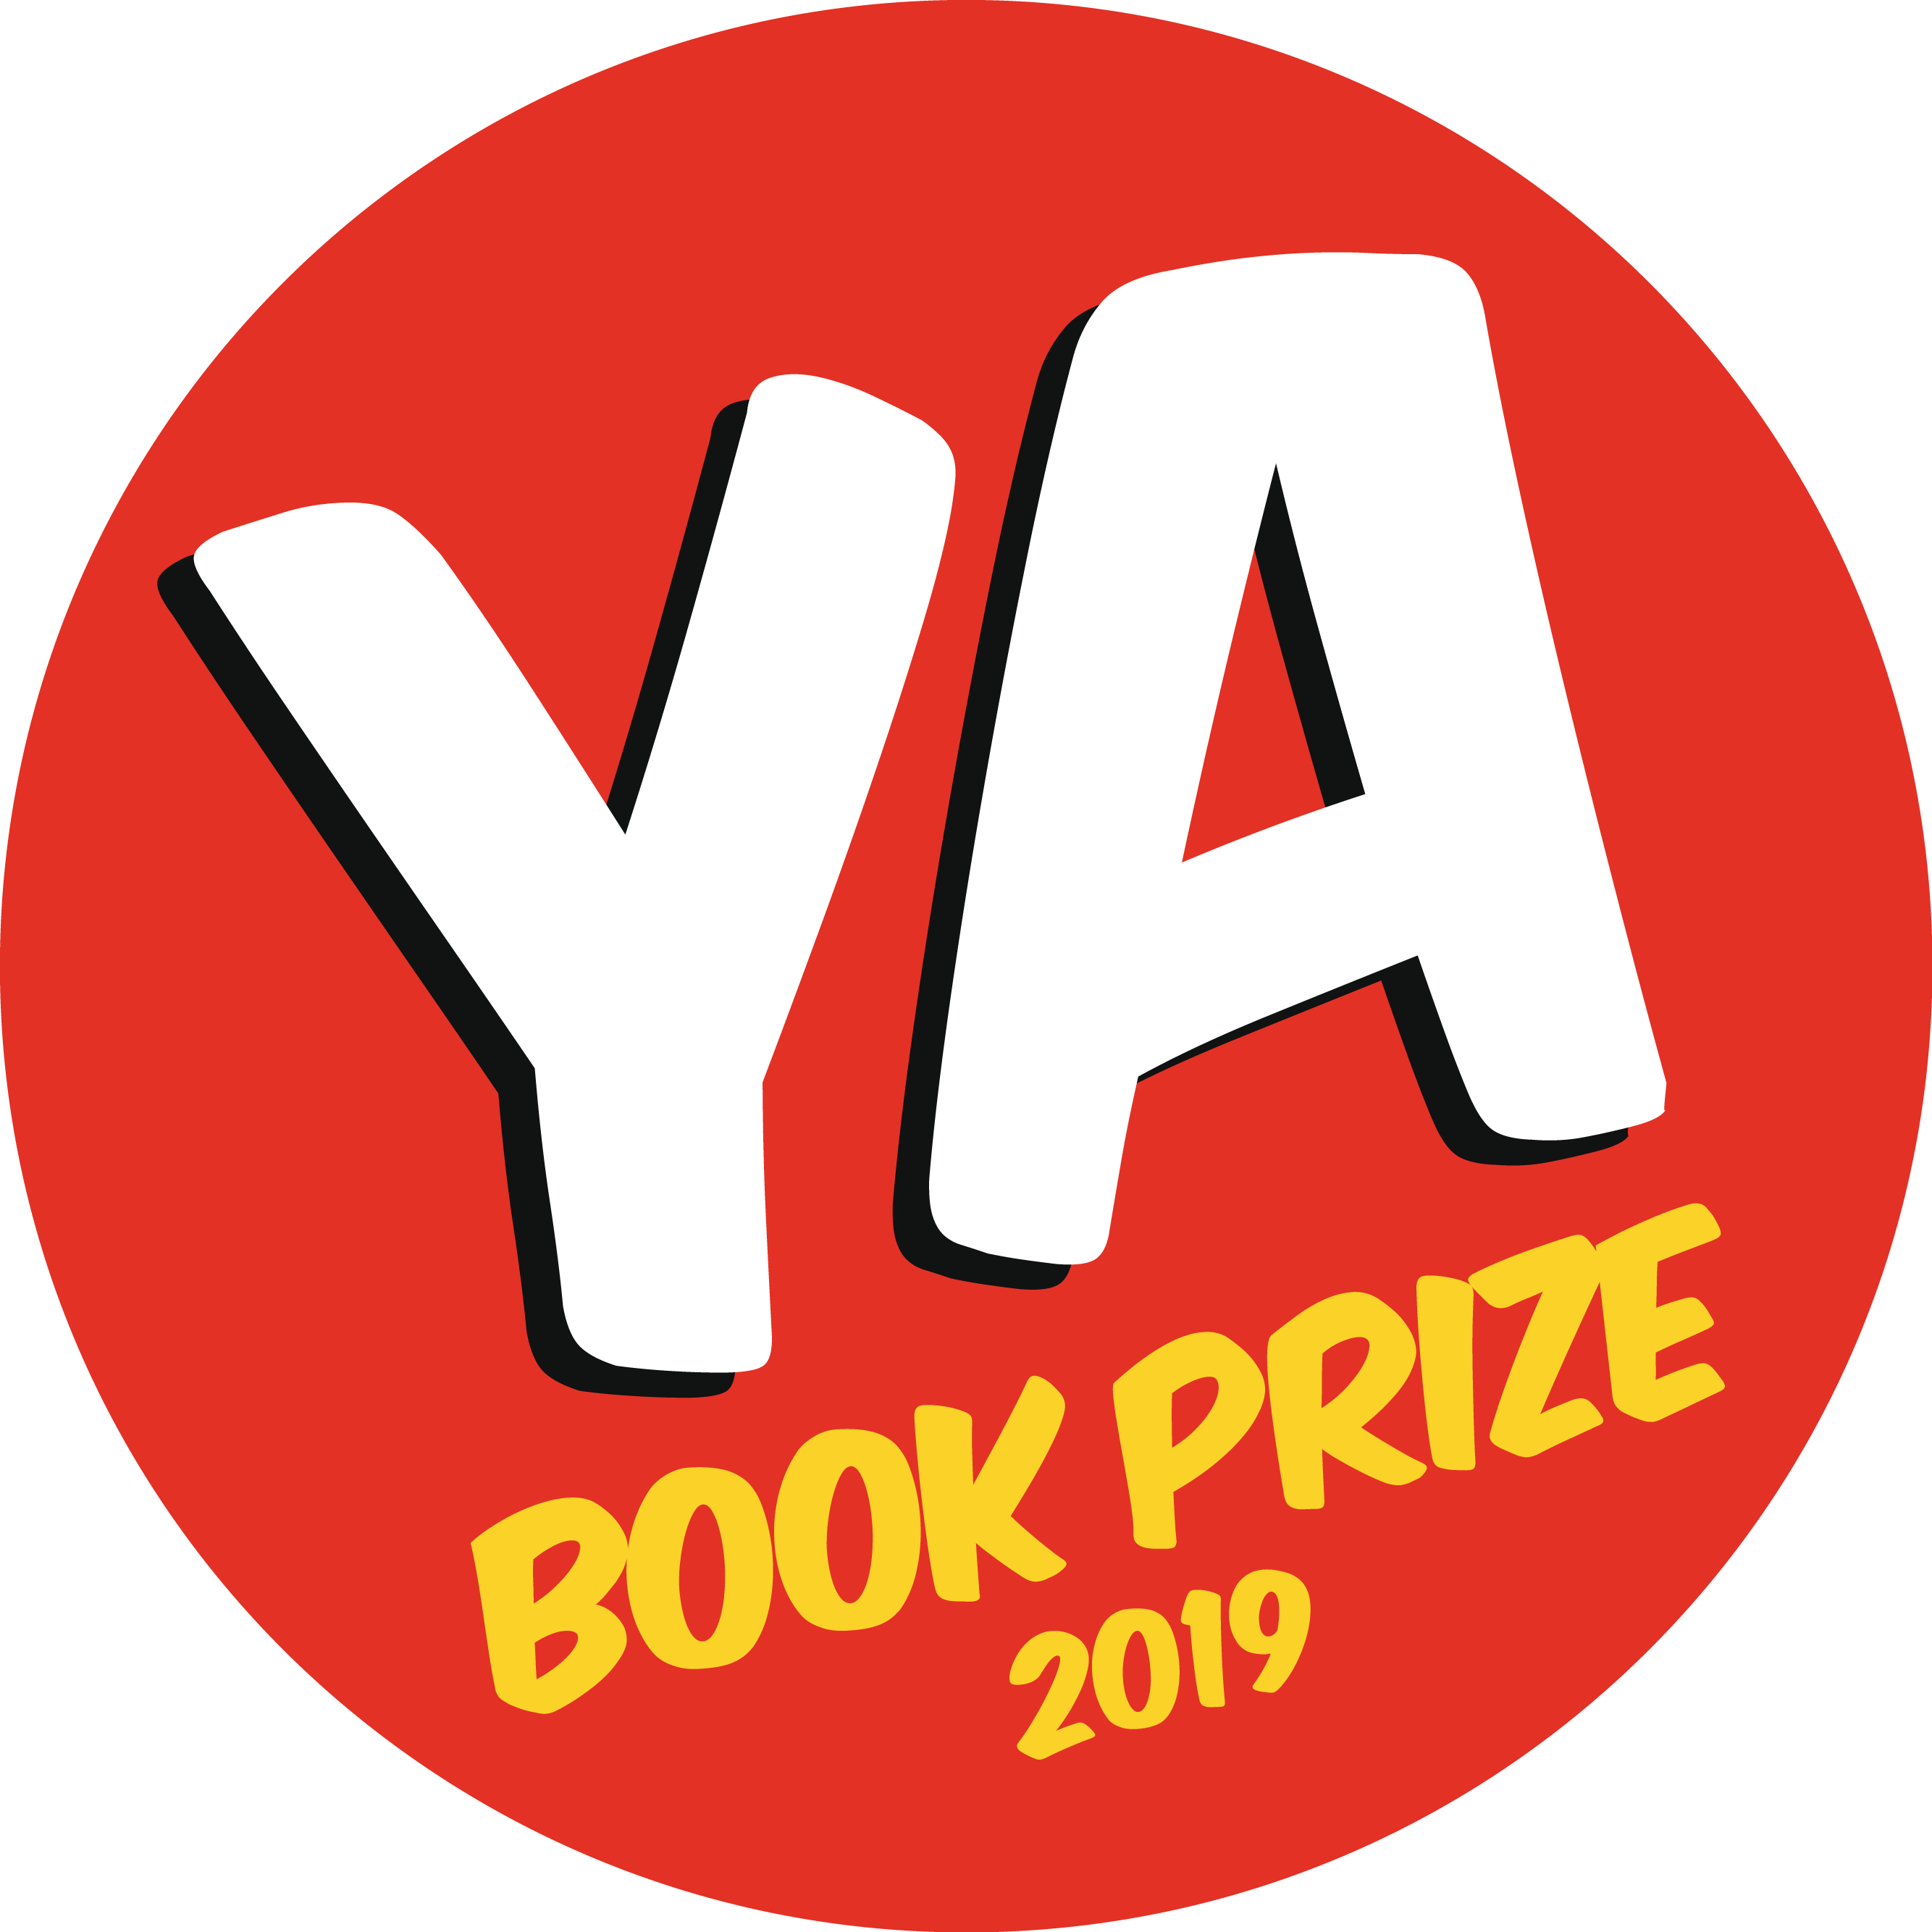 Prize Logo - YA Book Prize 2019 | The Bookseller